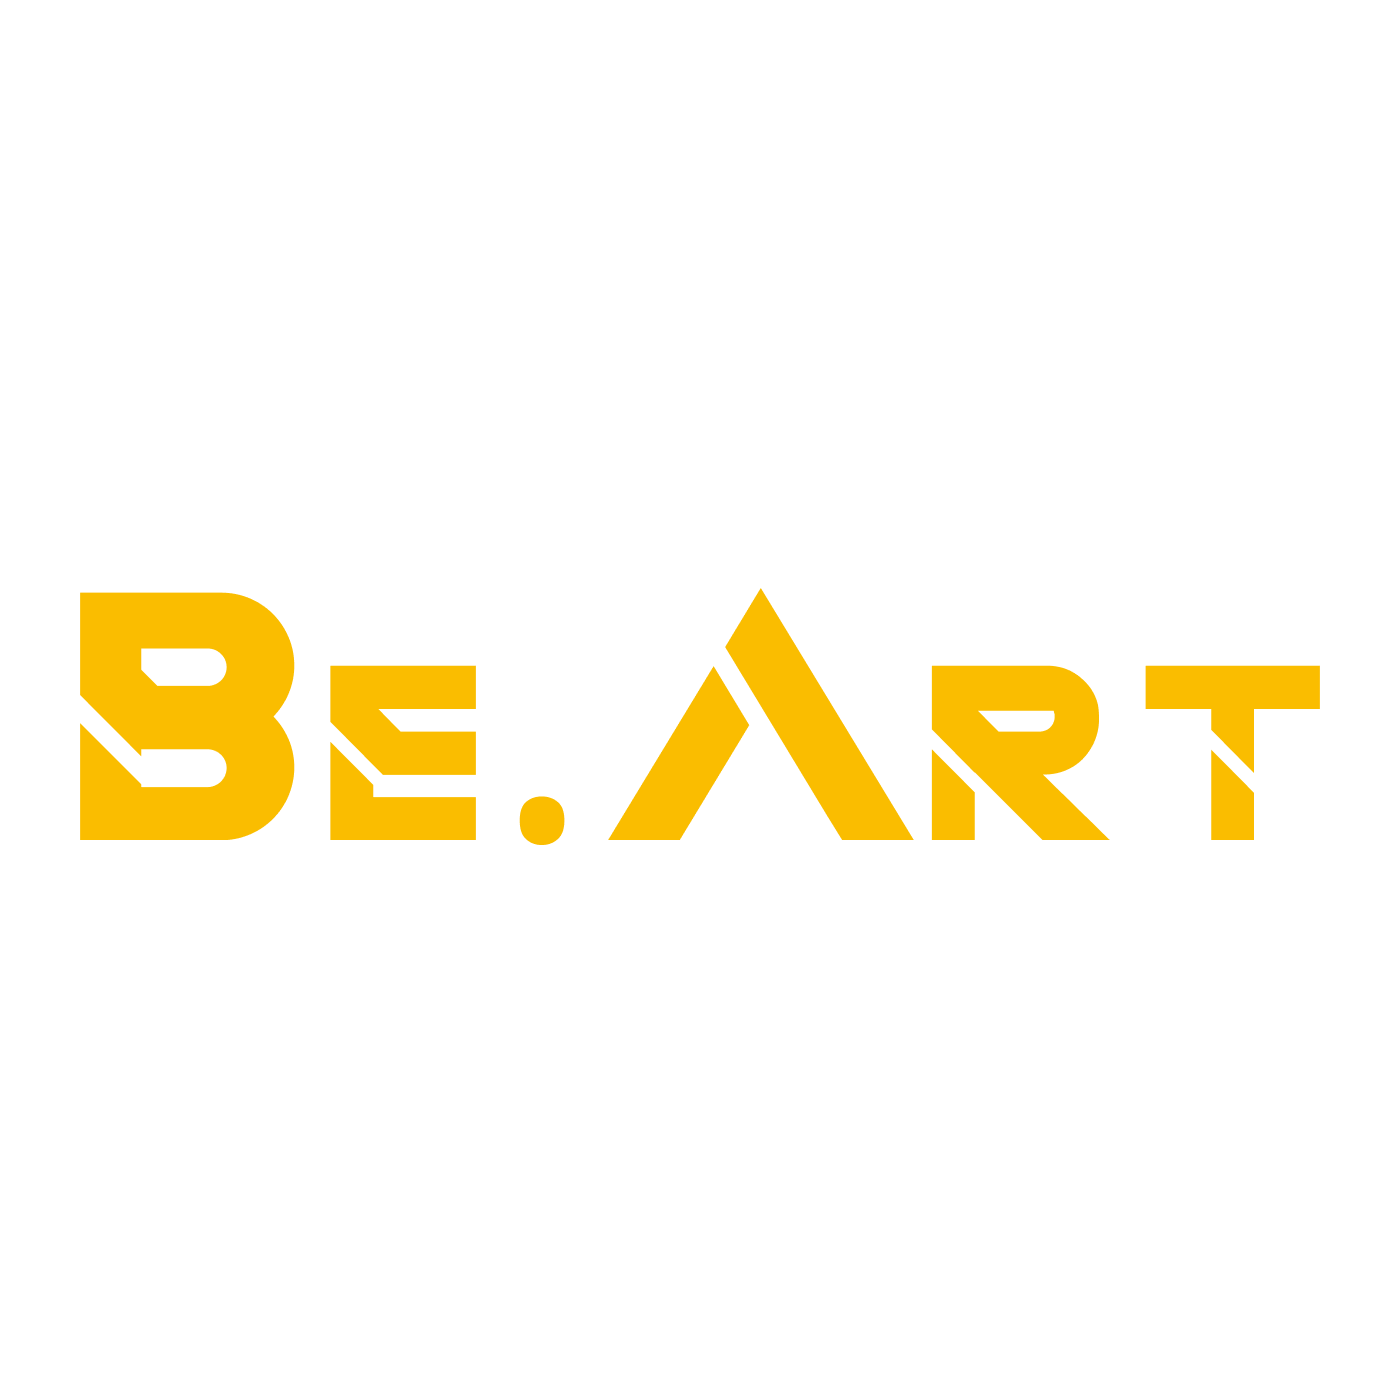 Be logo1